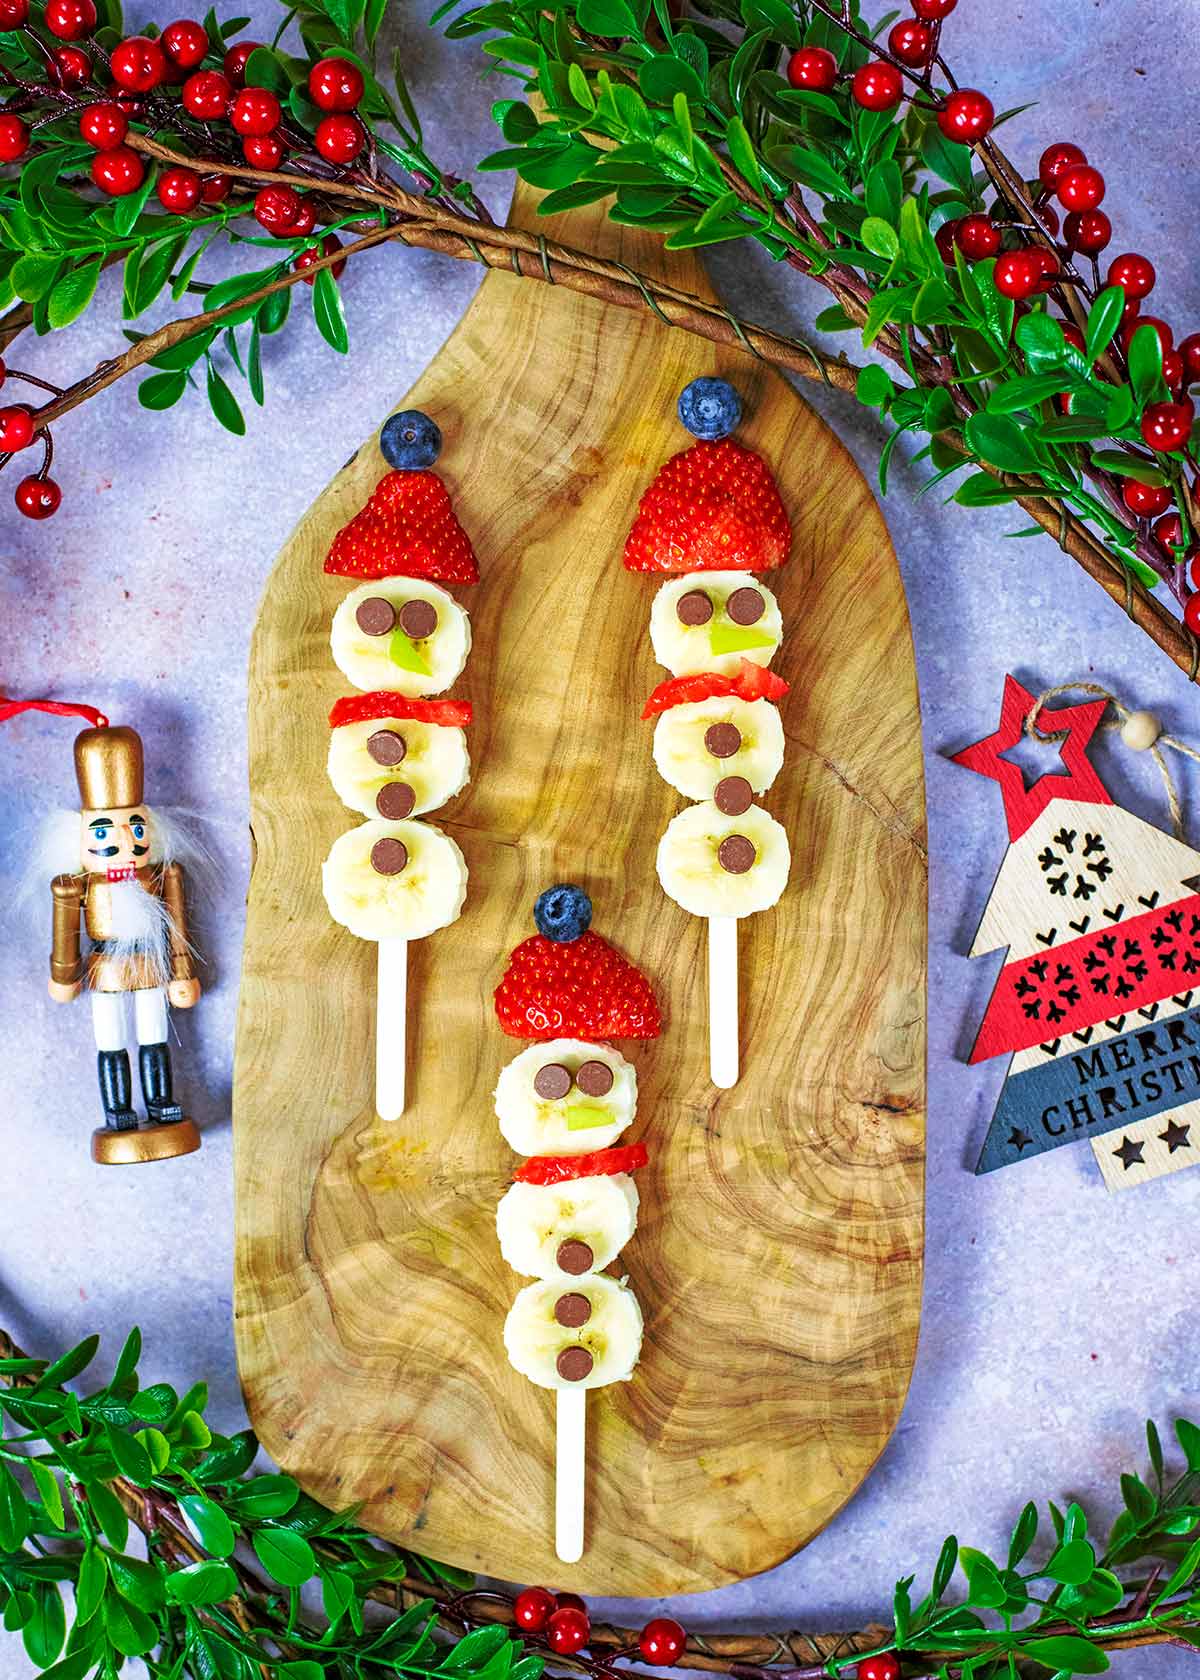 Slices of banana arranged into a snowman shape.